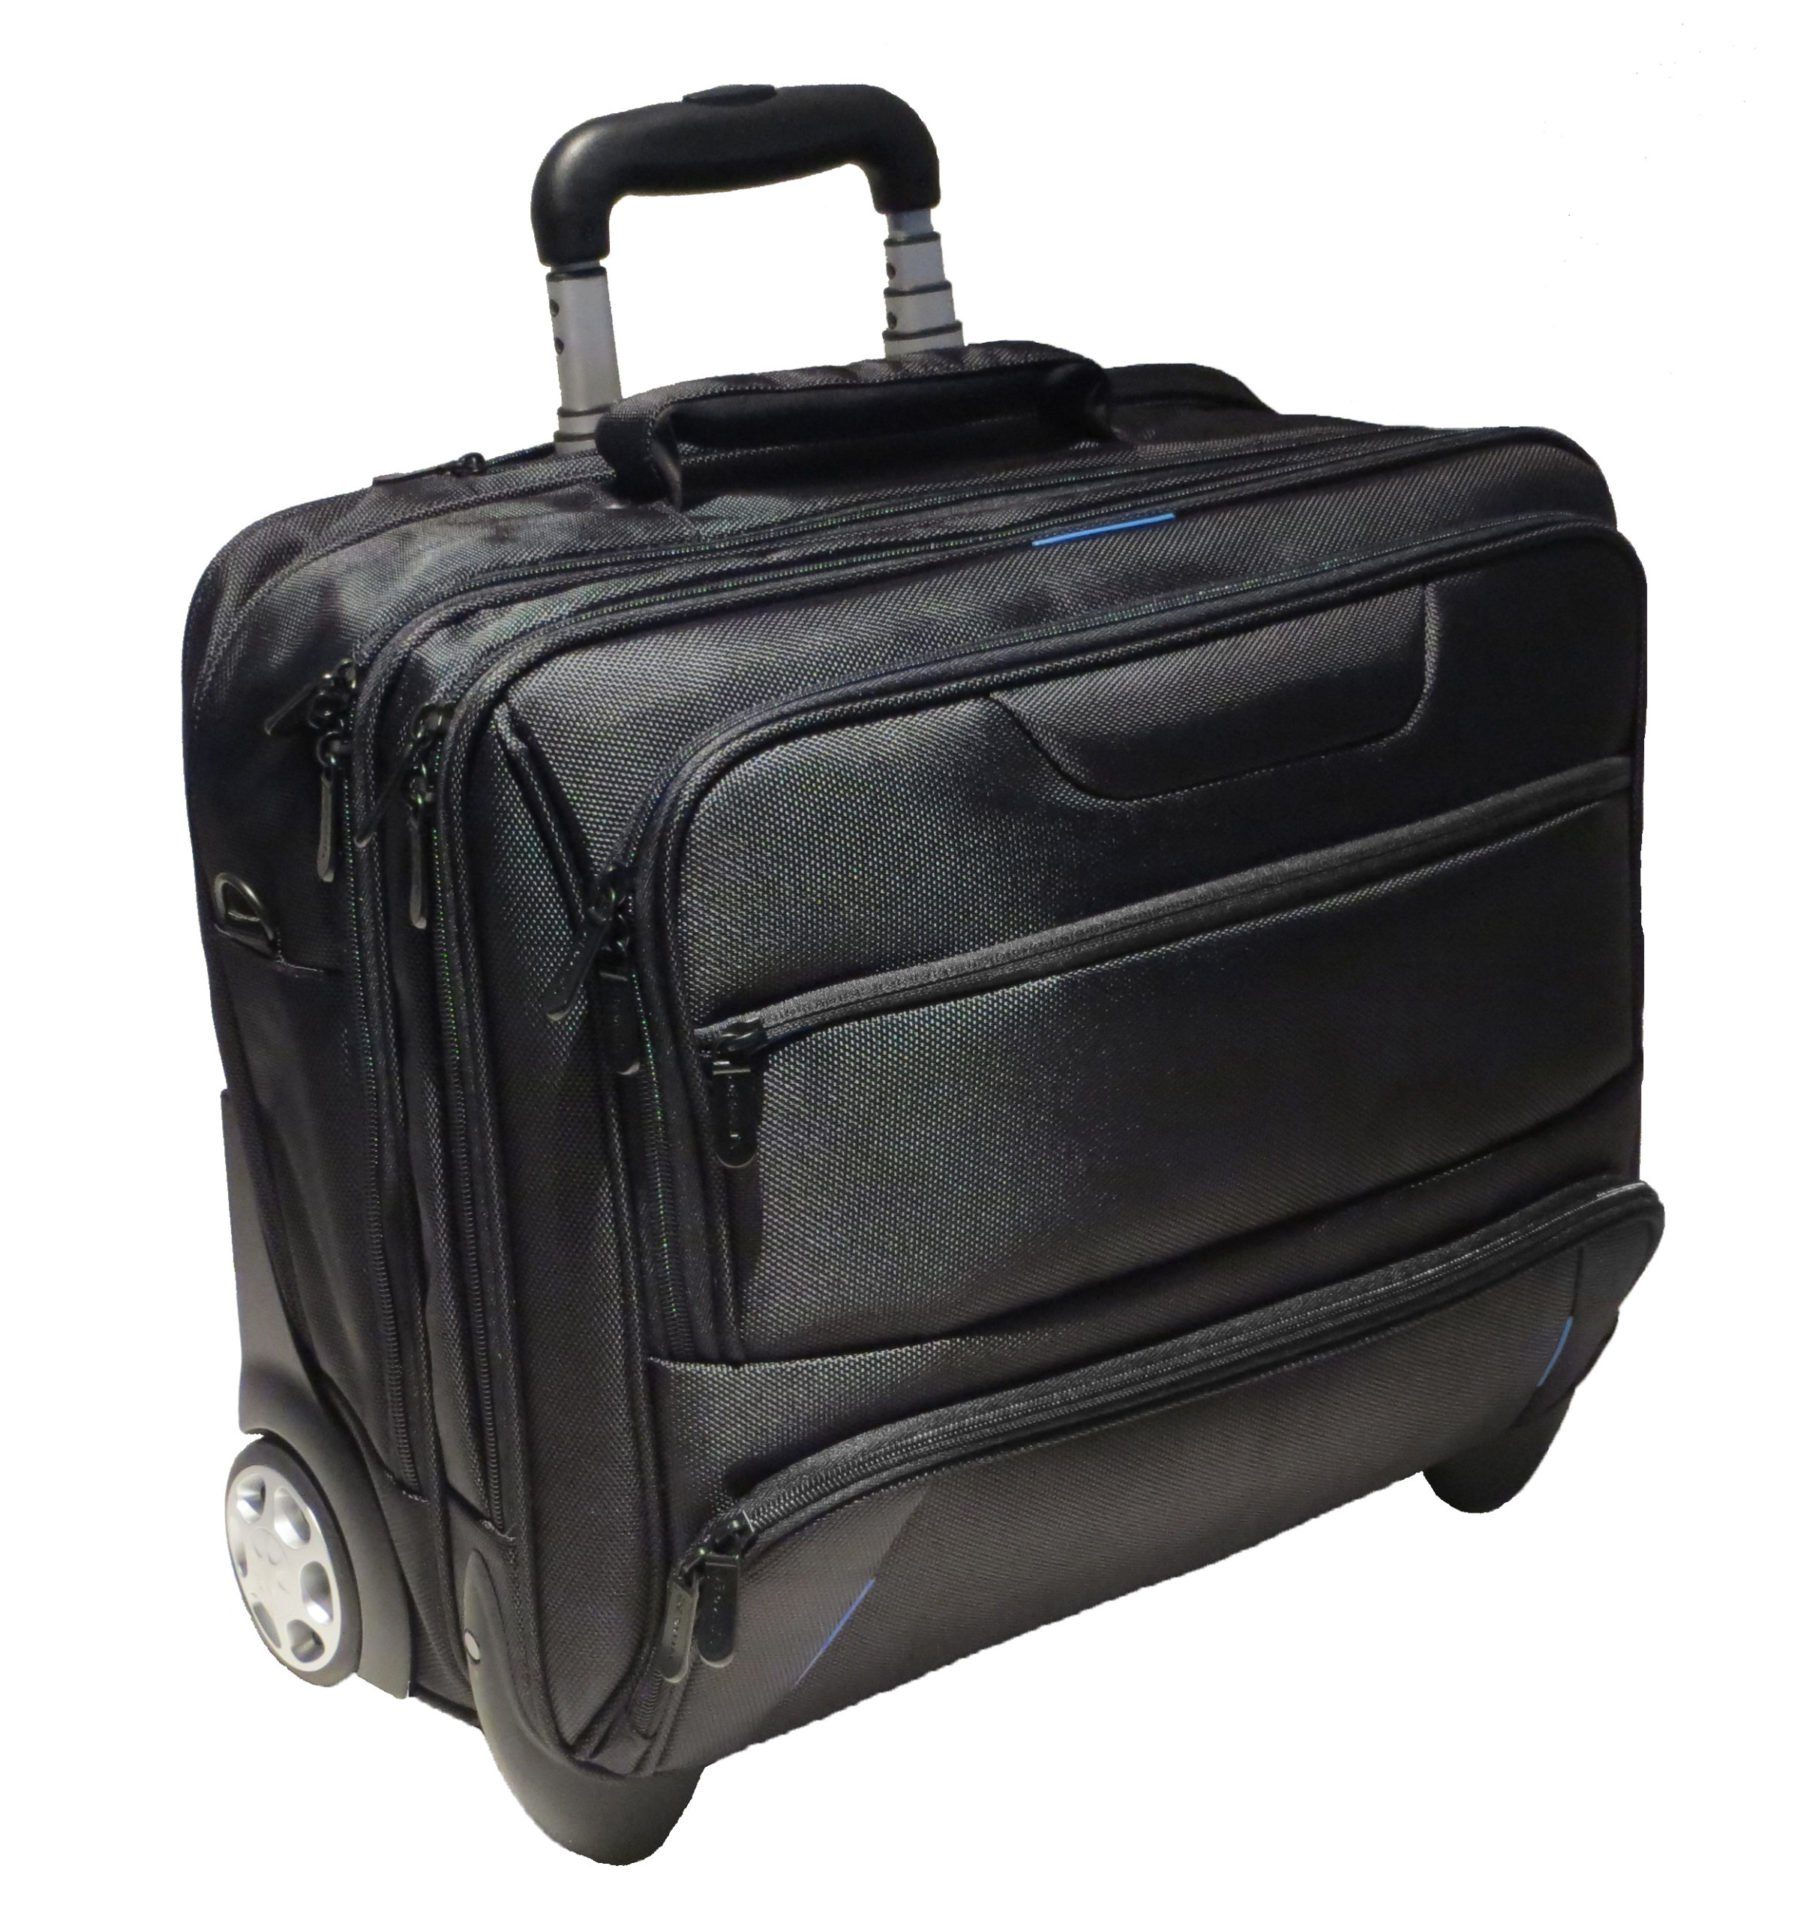 Dermata Business-Trolley - Laptop-Trolley, 17 Zoll [41 cm x 30 cm] schwarz, 2  Rollen, Organizer | Business-Trolleys